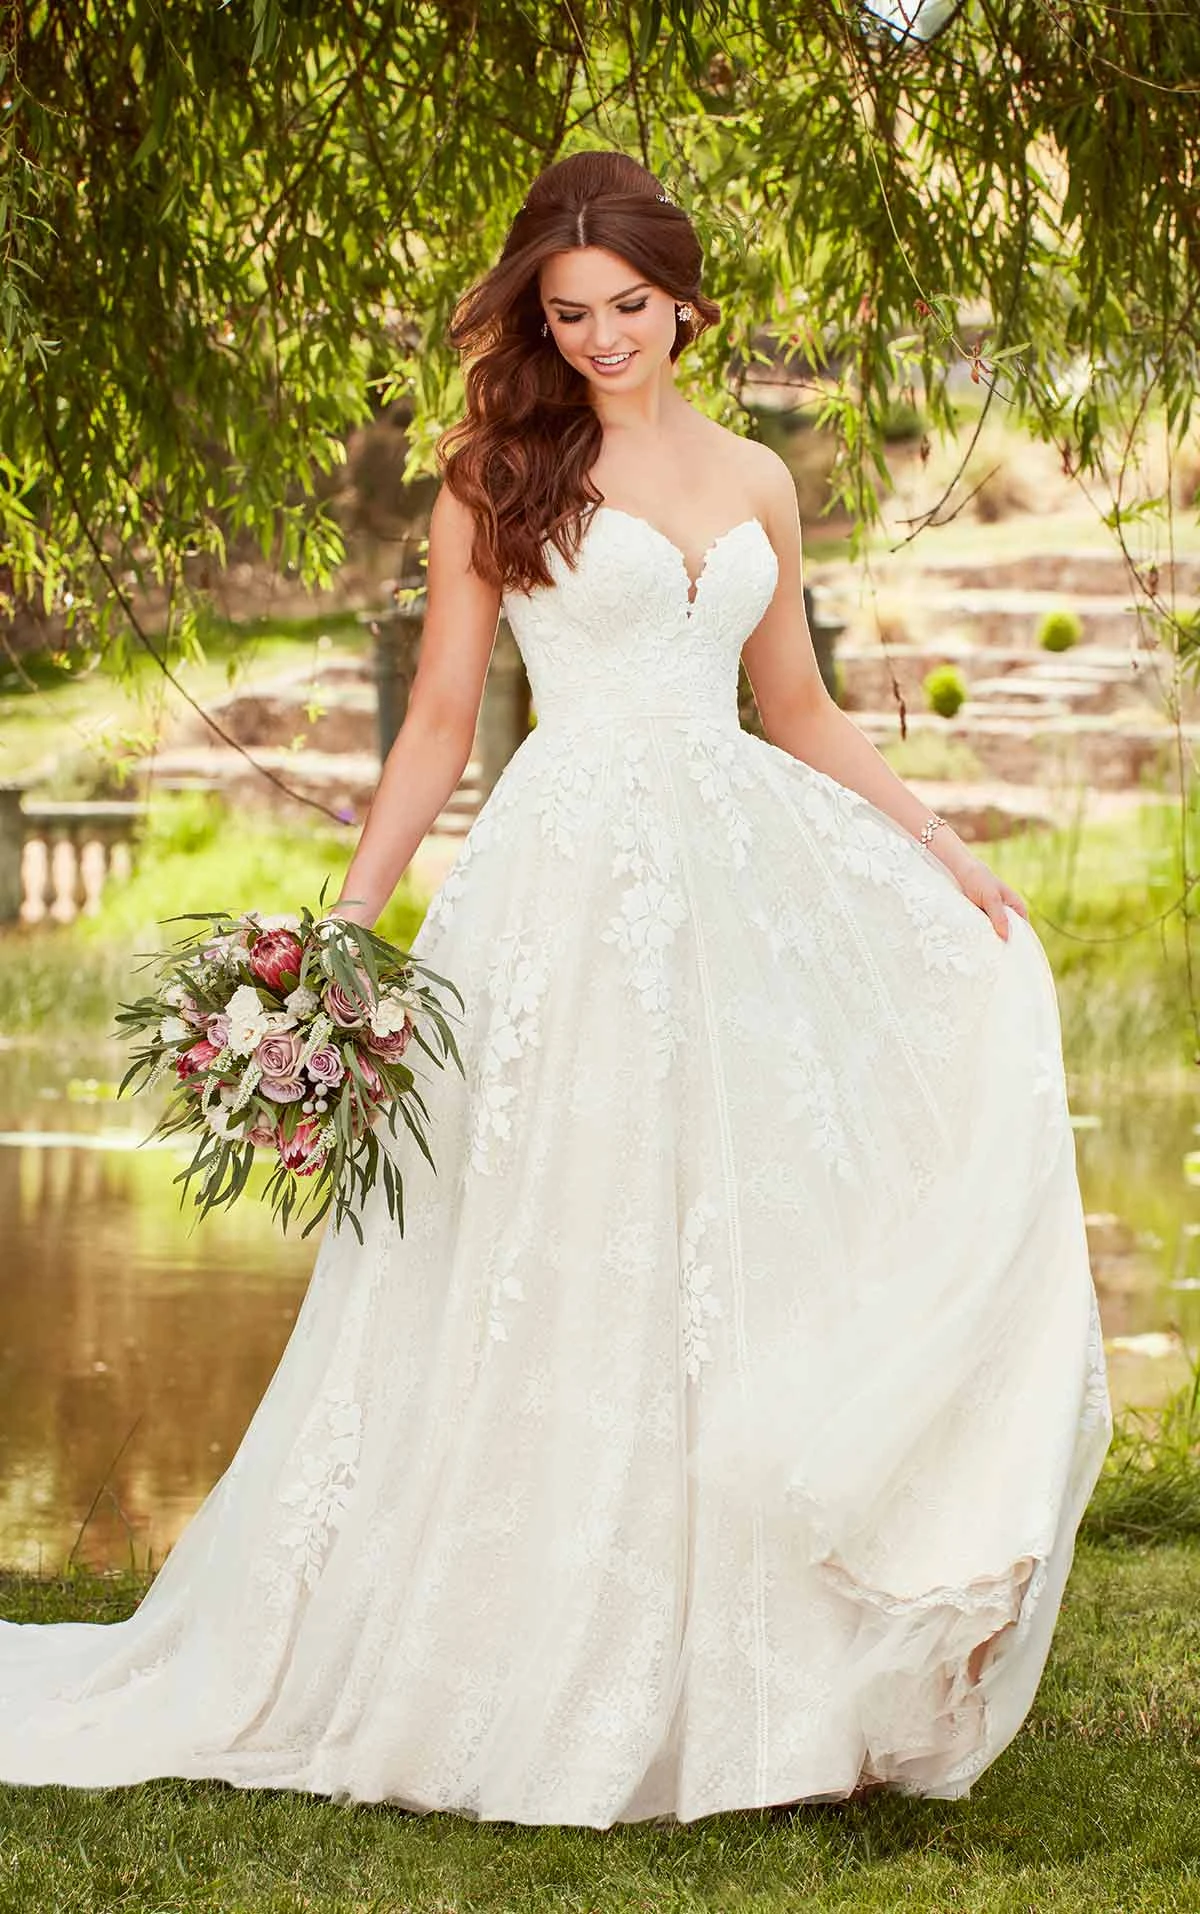 Strapless ALine Wedding Dress with Cotton Lace Essense